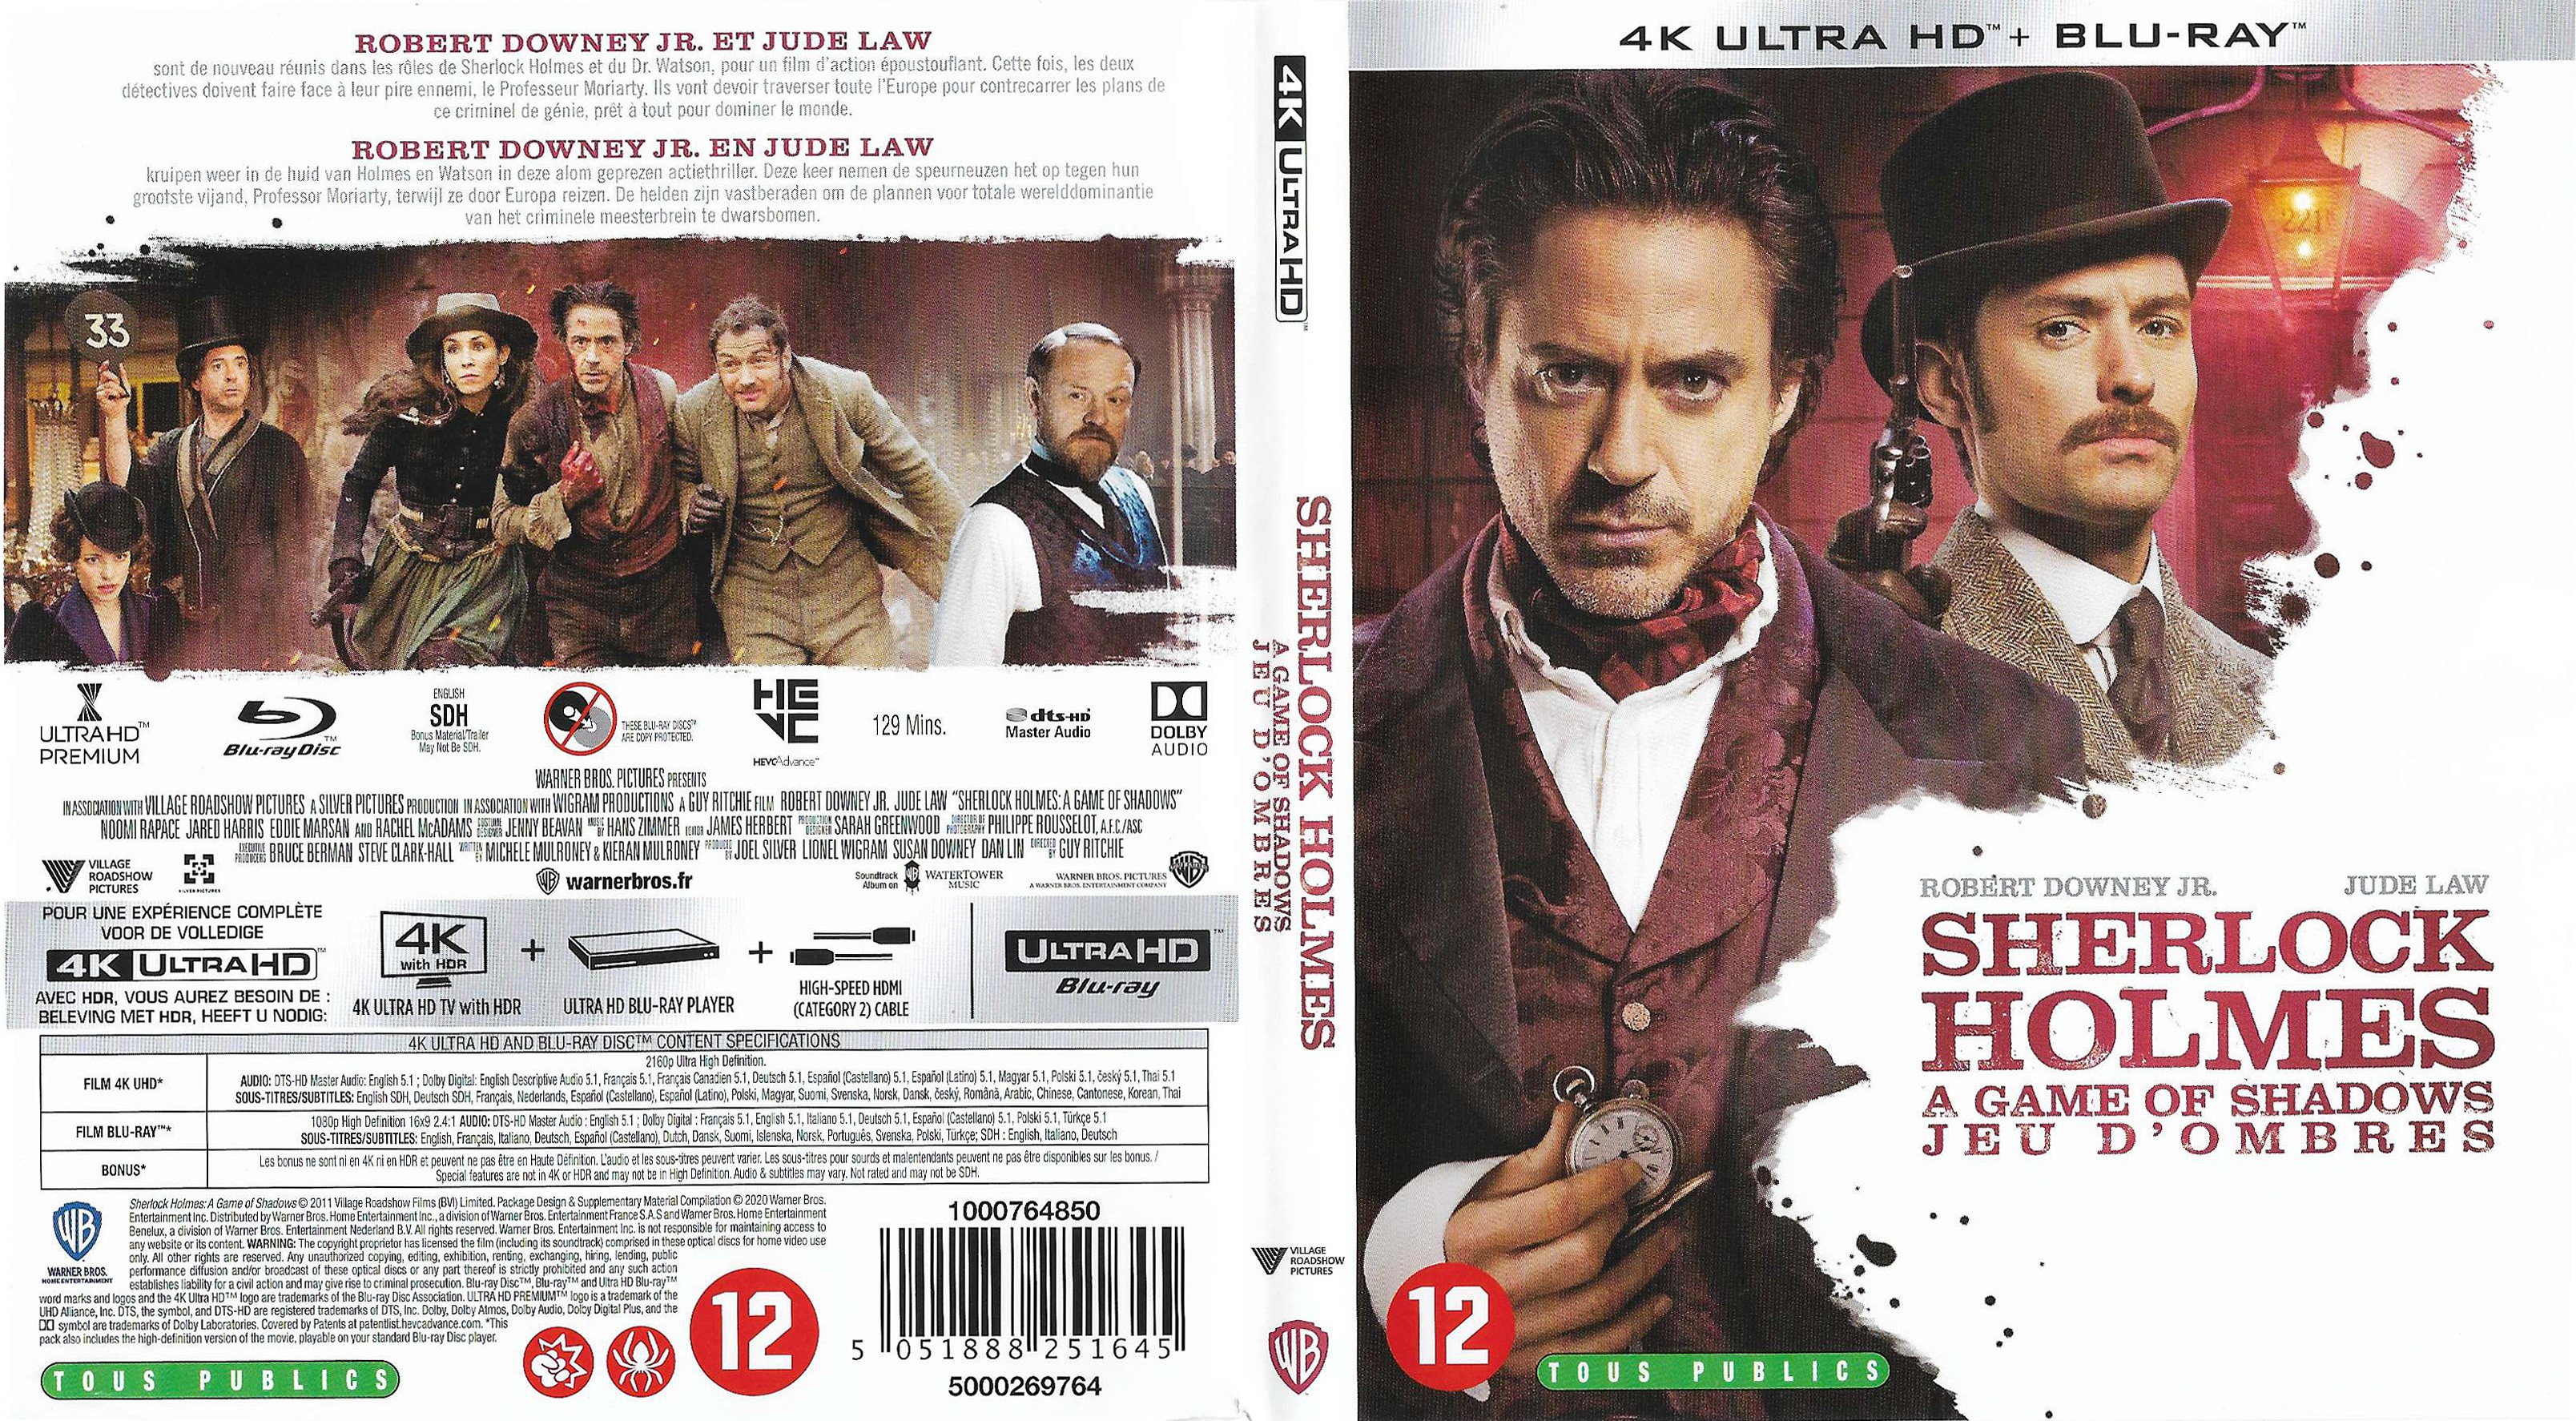 Jaquette DVD Sherlock Holmes 2 Jeu d